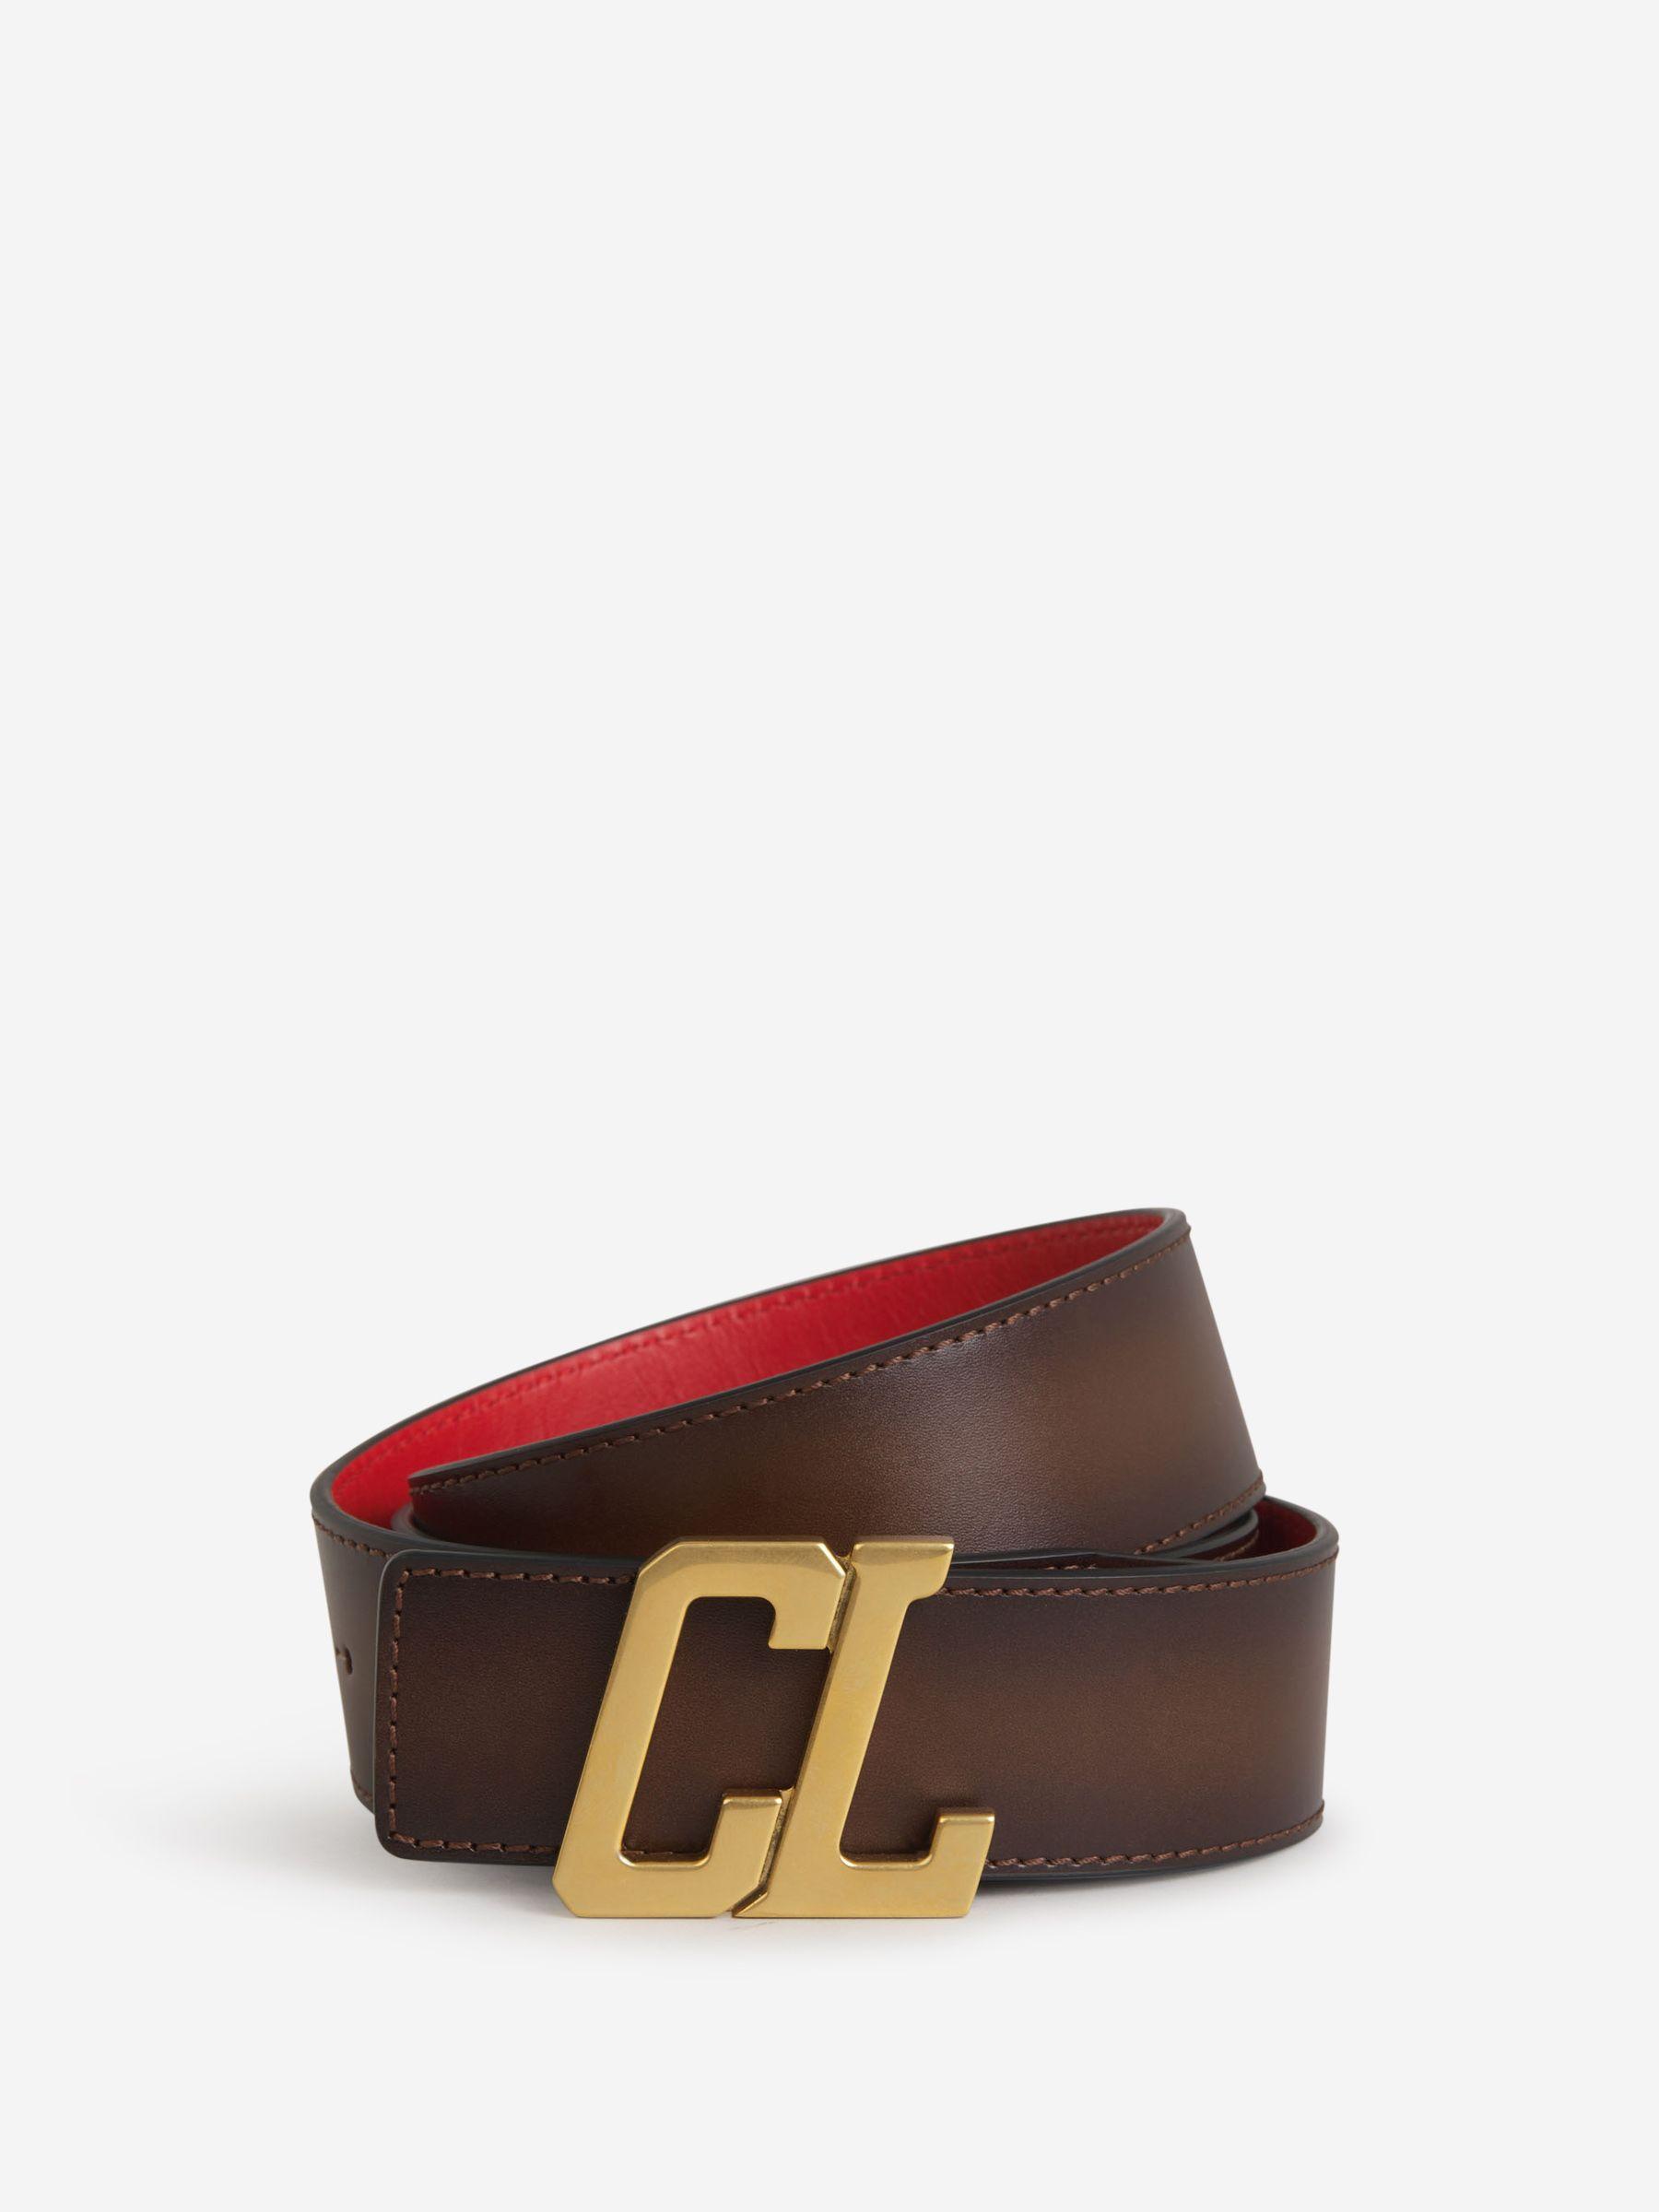 Christian Louboutin CL Logo Leather Belt for Men